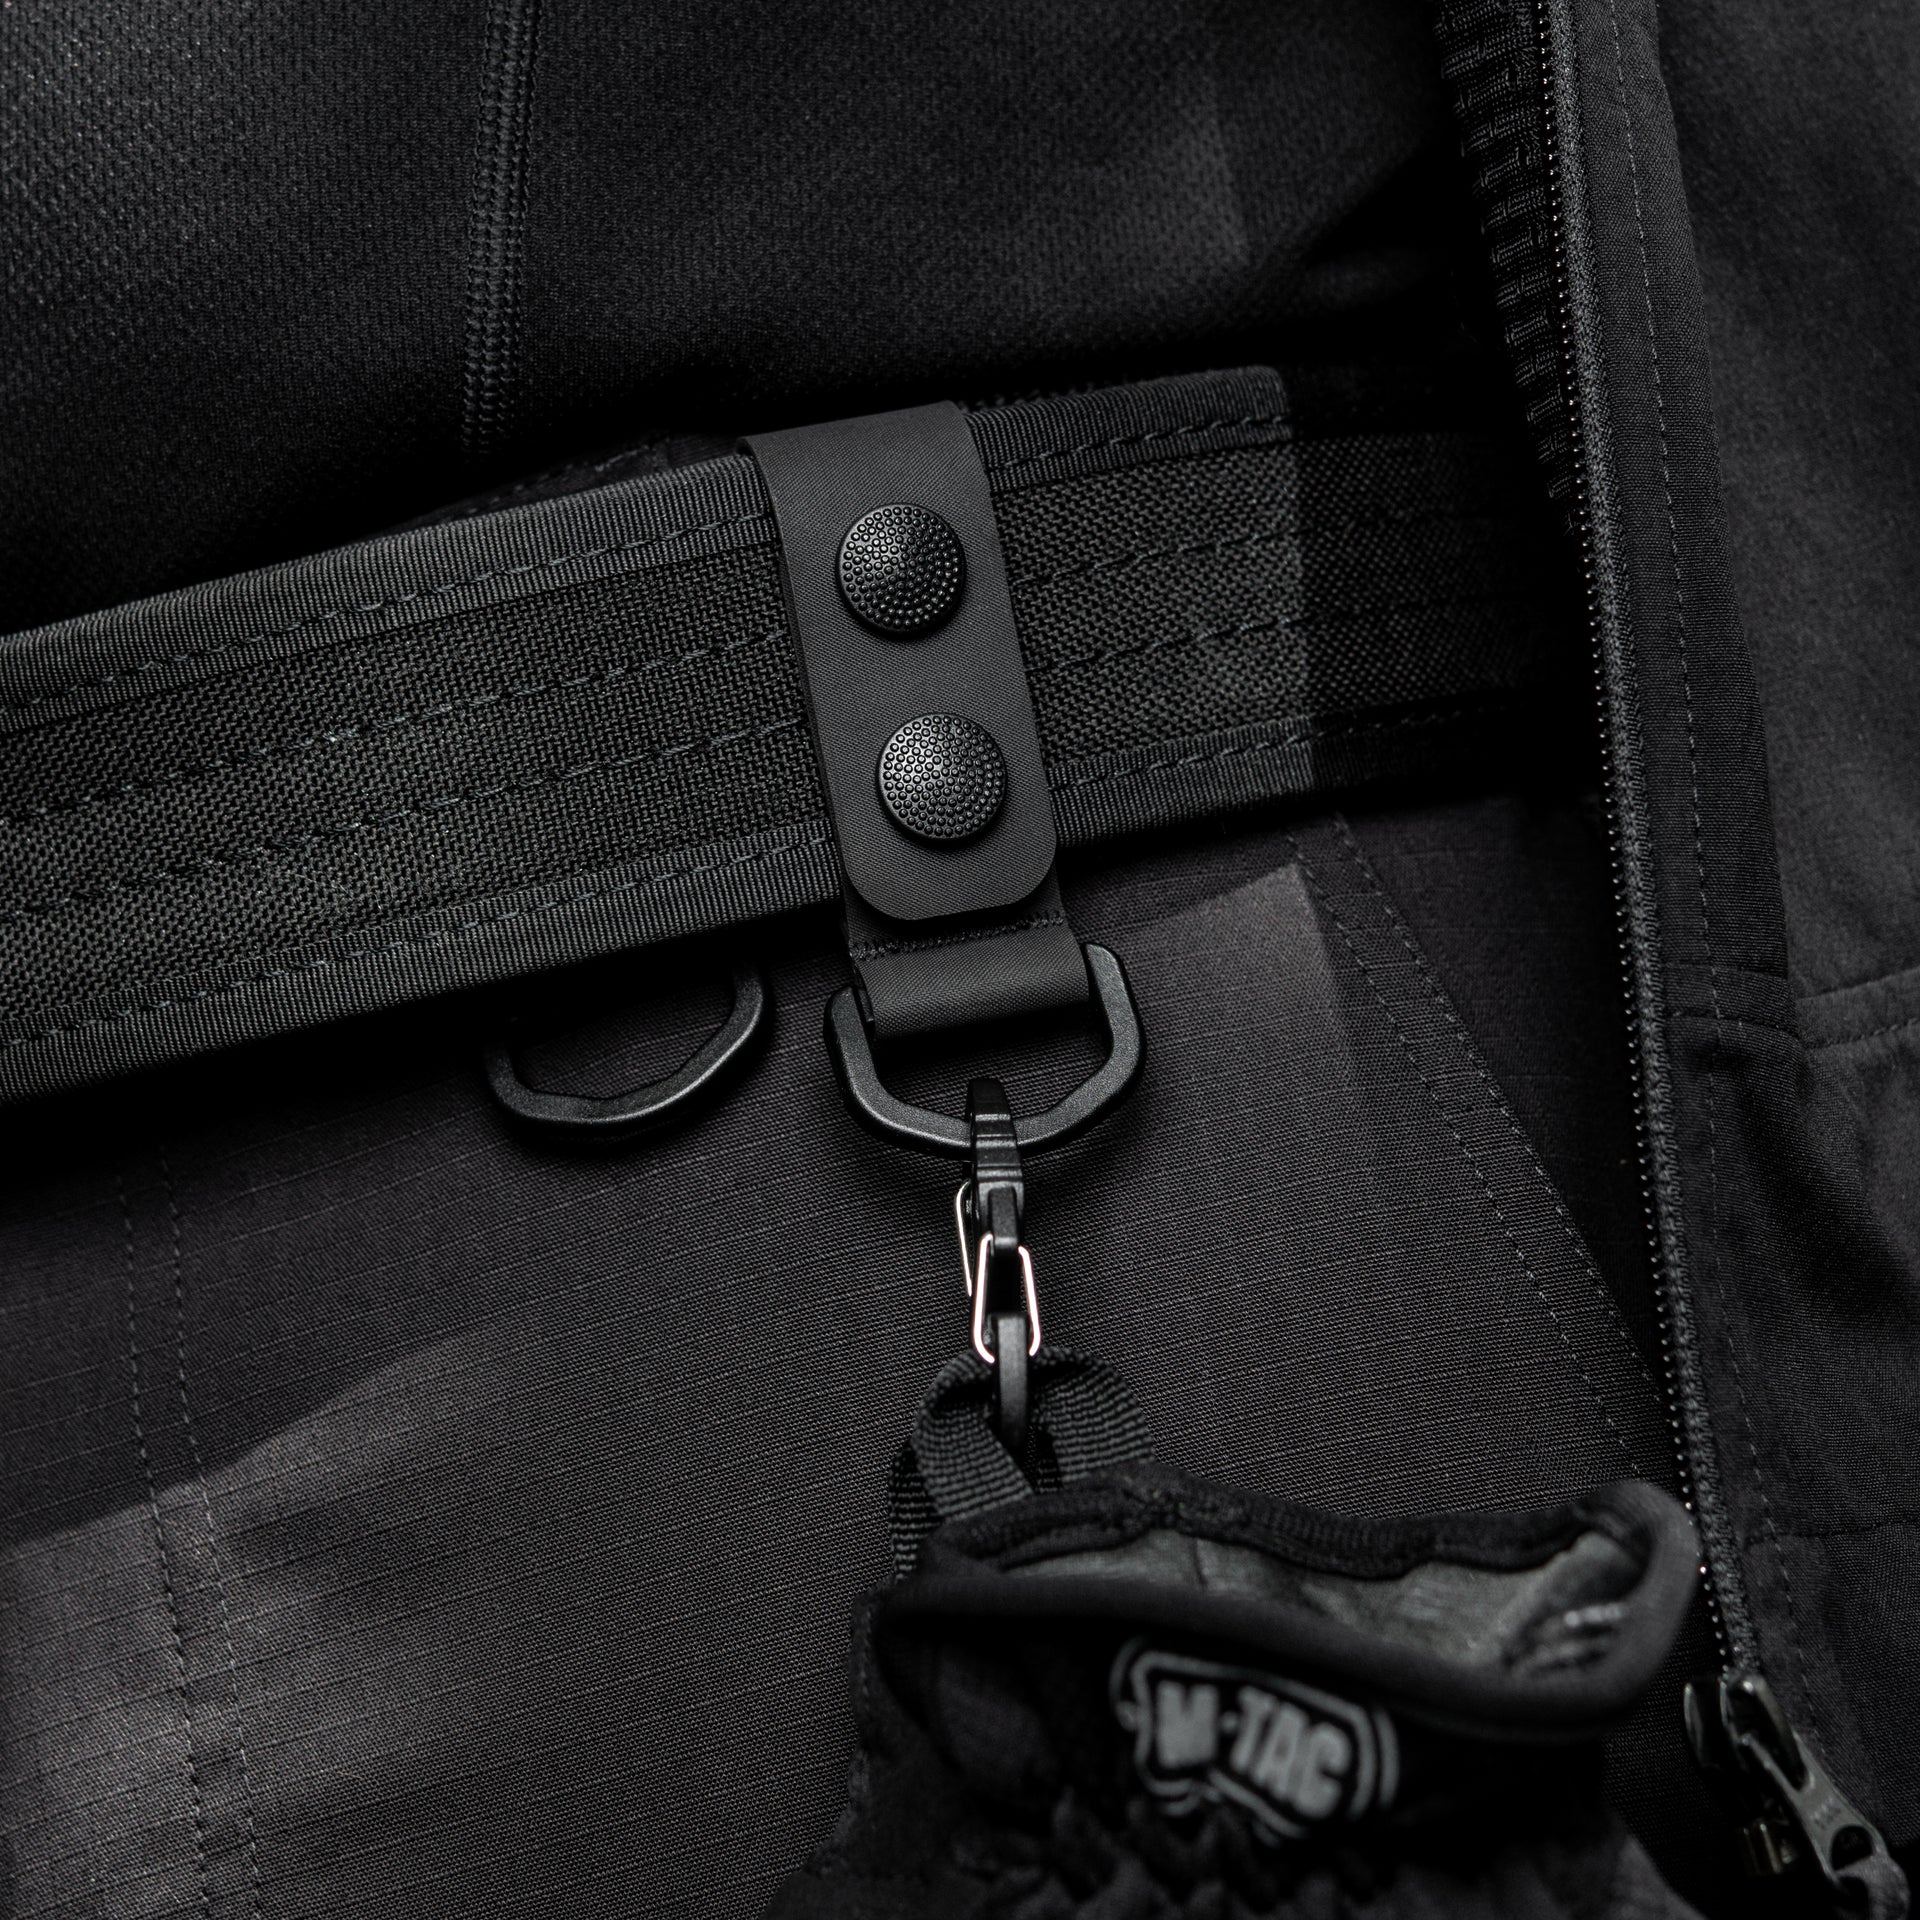 M-Tac Police Duty Belt Keepers Hypalon for 2 inch wide (Set of 5) – M-TAC